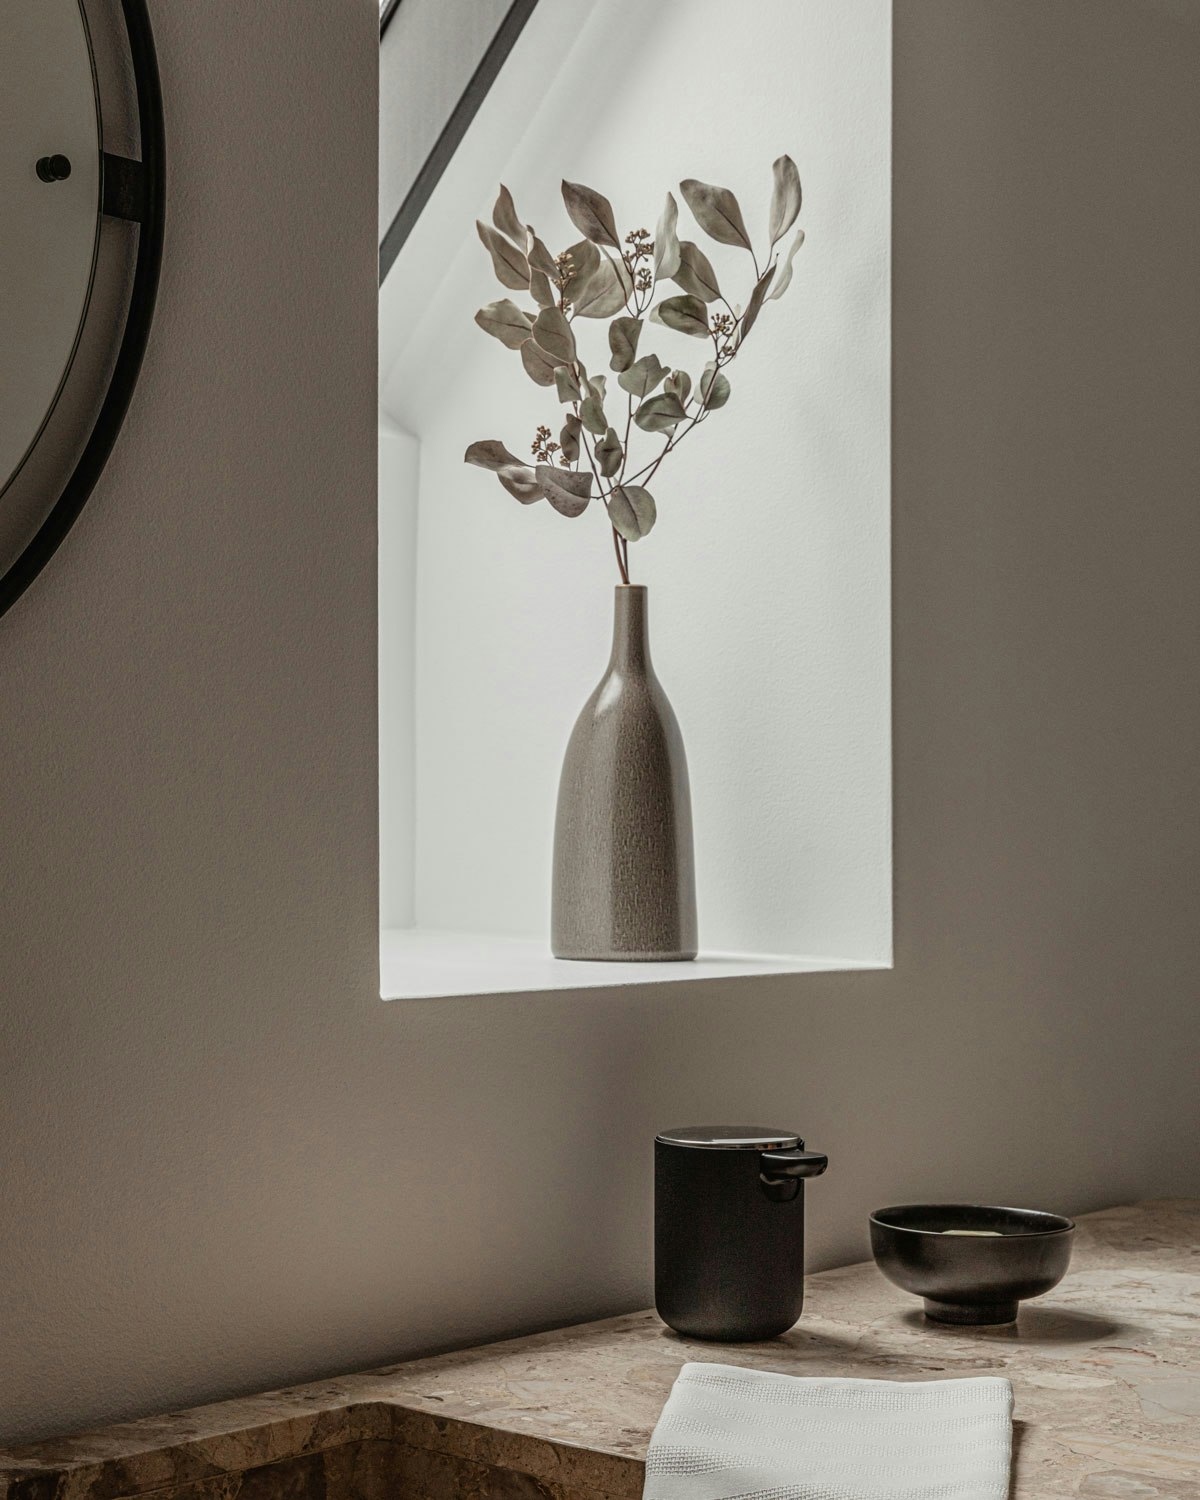 https://royaldesign.com/image/2/menu-strandgade-stem-vase-10x25-cm-olive-green-0?w=800&quality=80